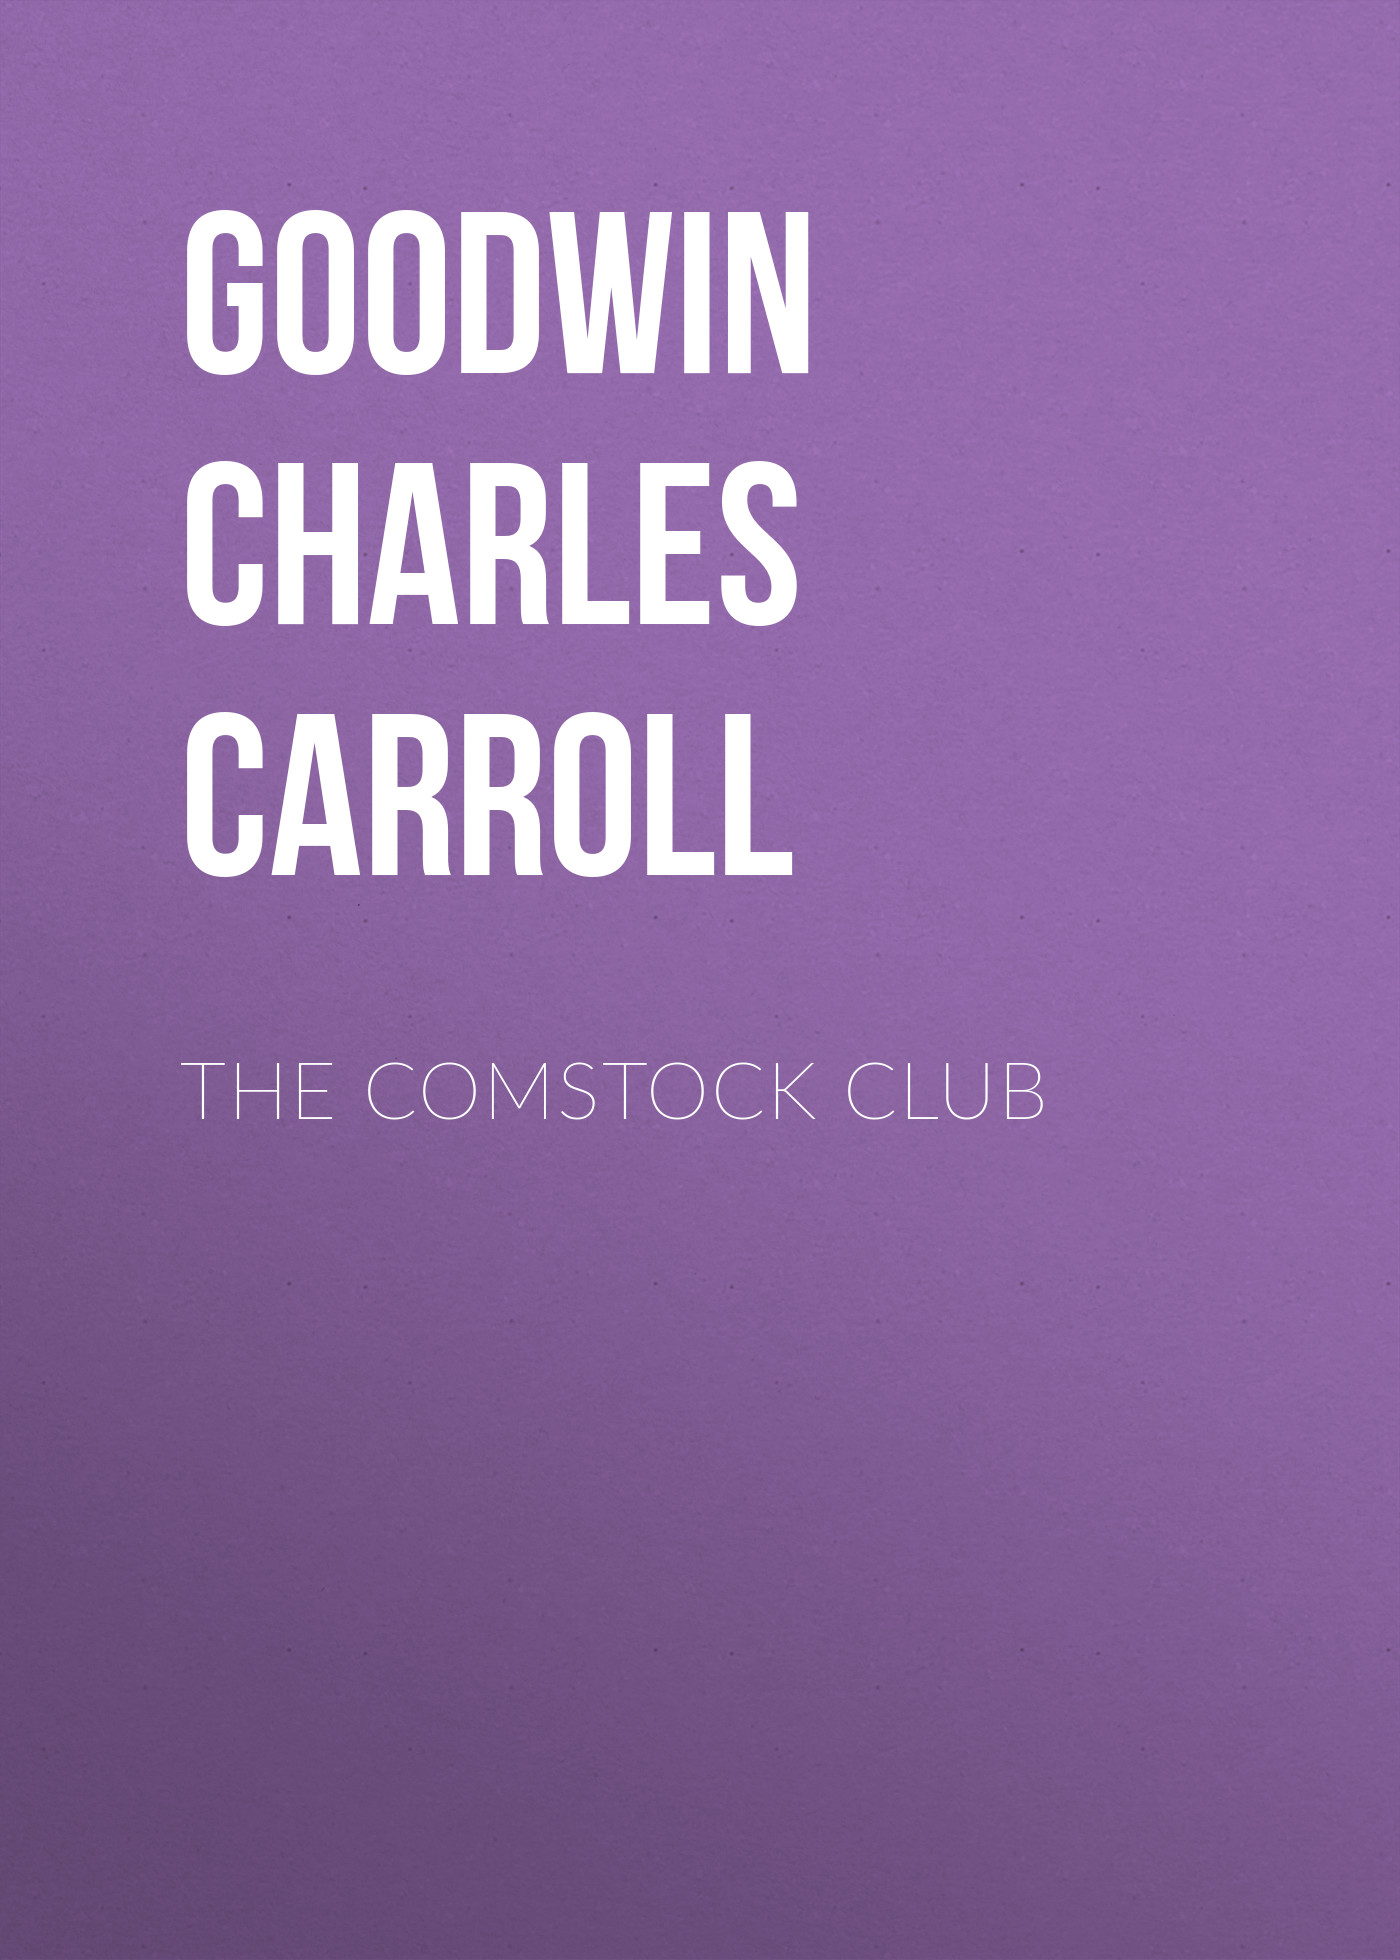 Goodwin Charles Carroll The Comstock Club